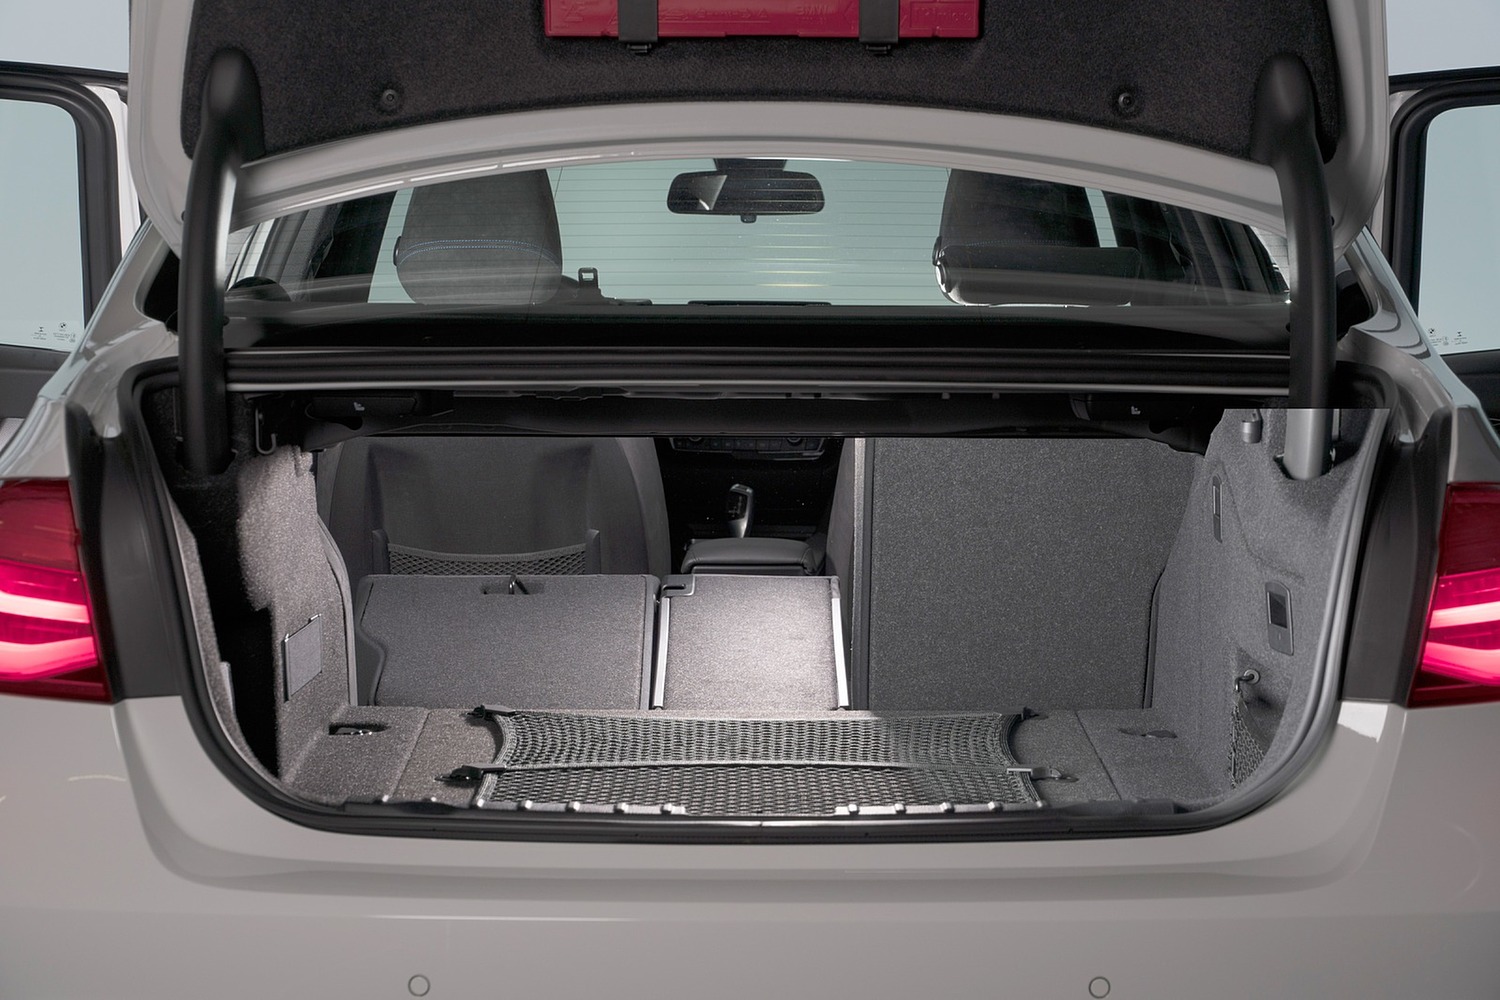 BMW 3 Series 330e iPerformance Sedan Interior (2017 model year shown)